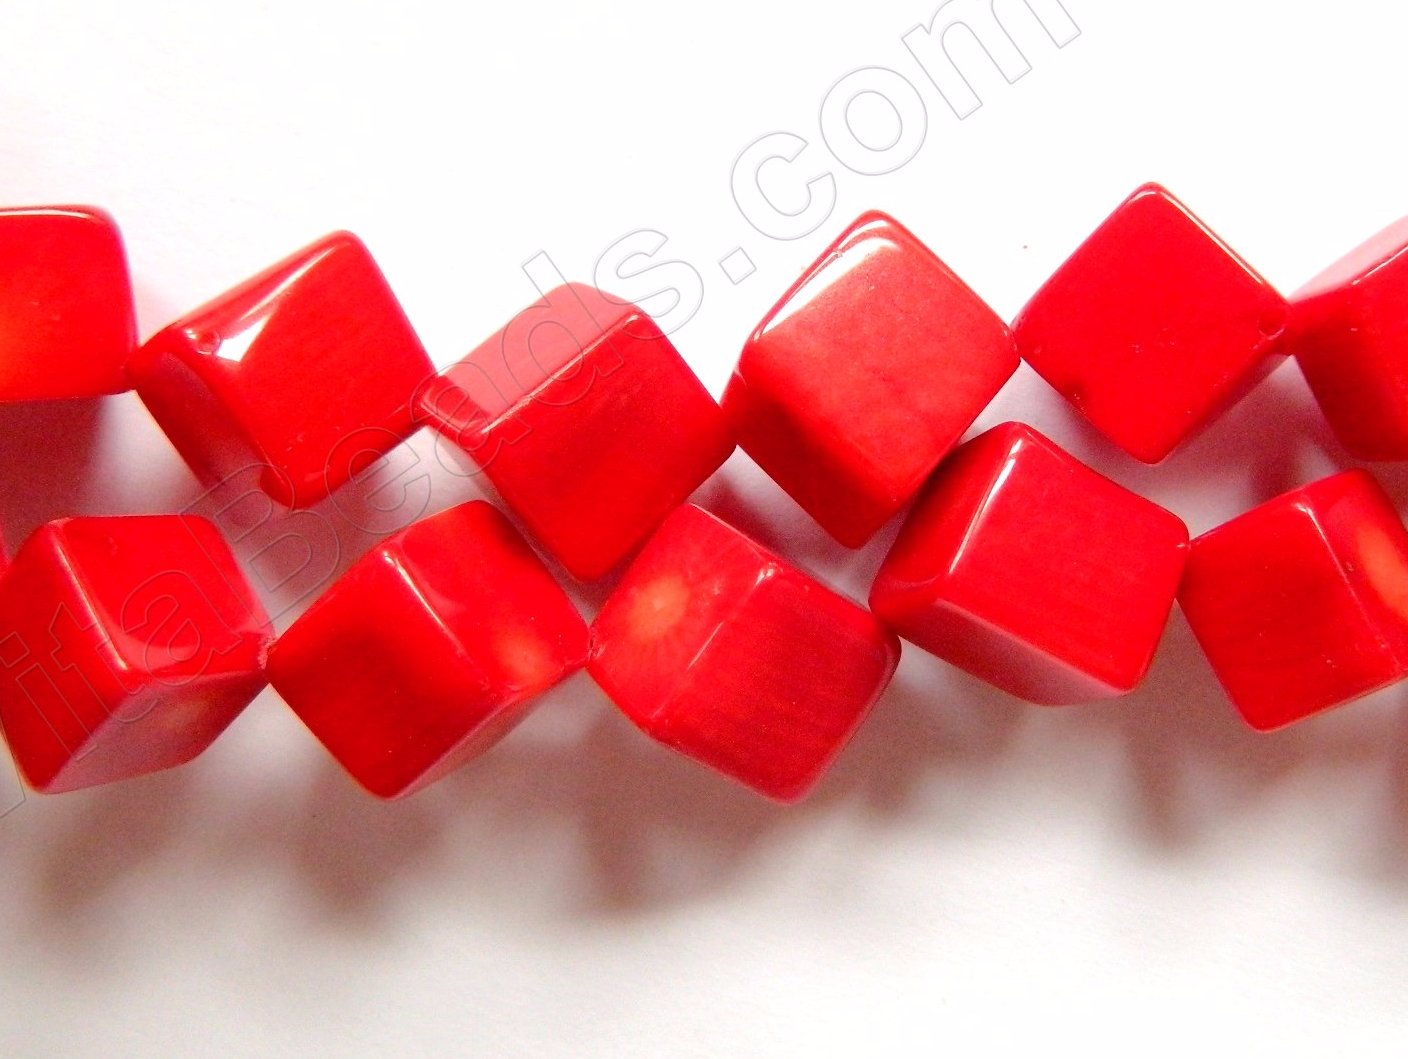 Big Red Coral   -  Di-drilled Cubes 16"